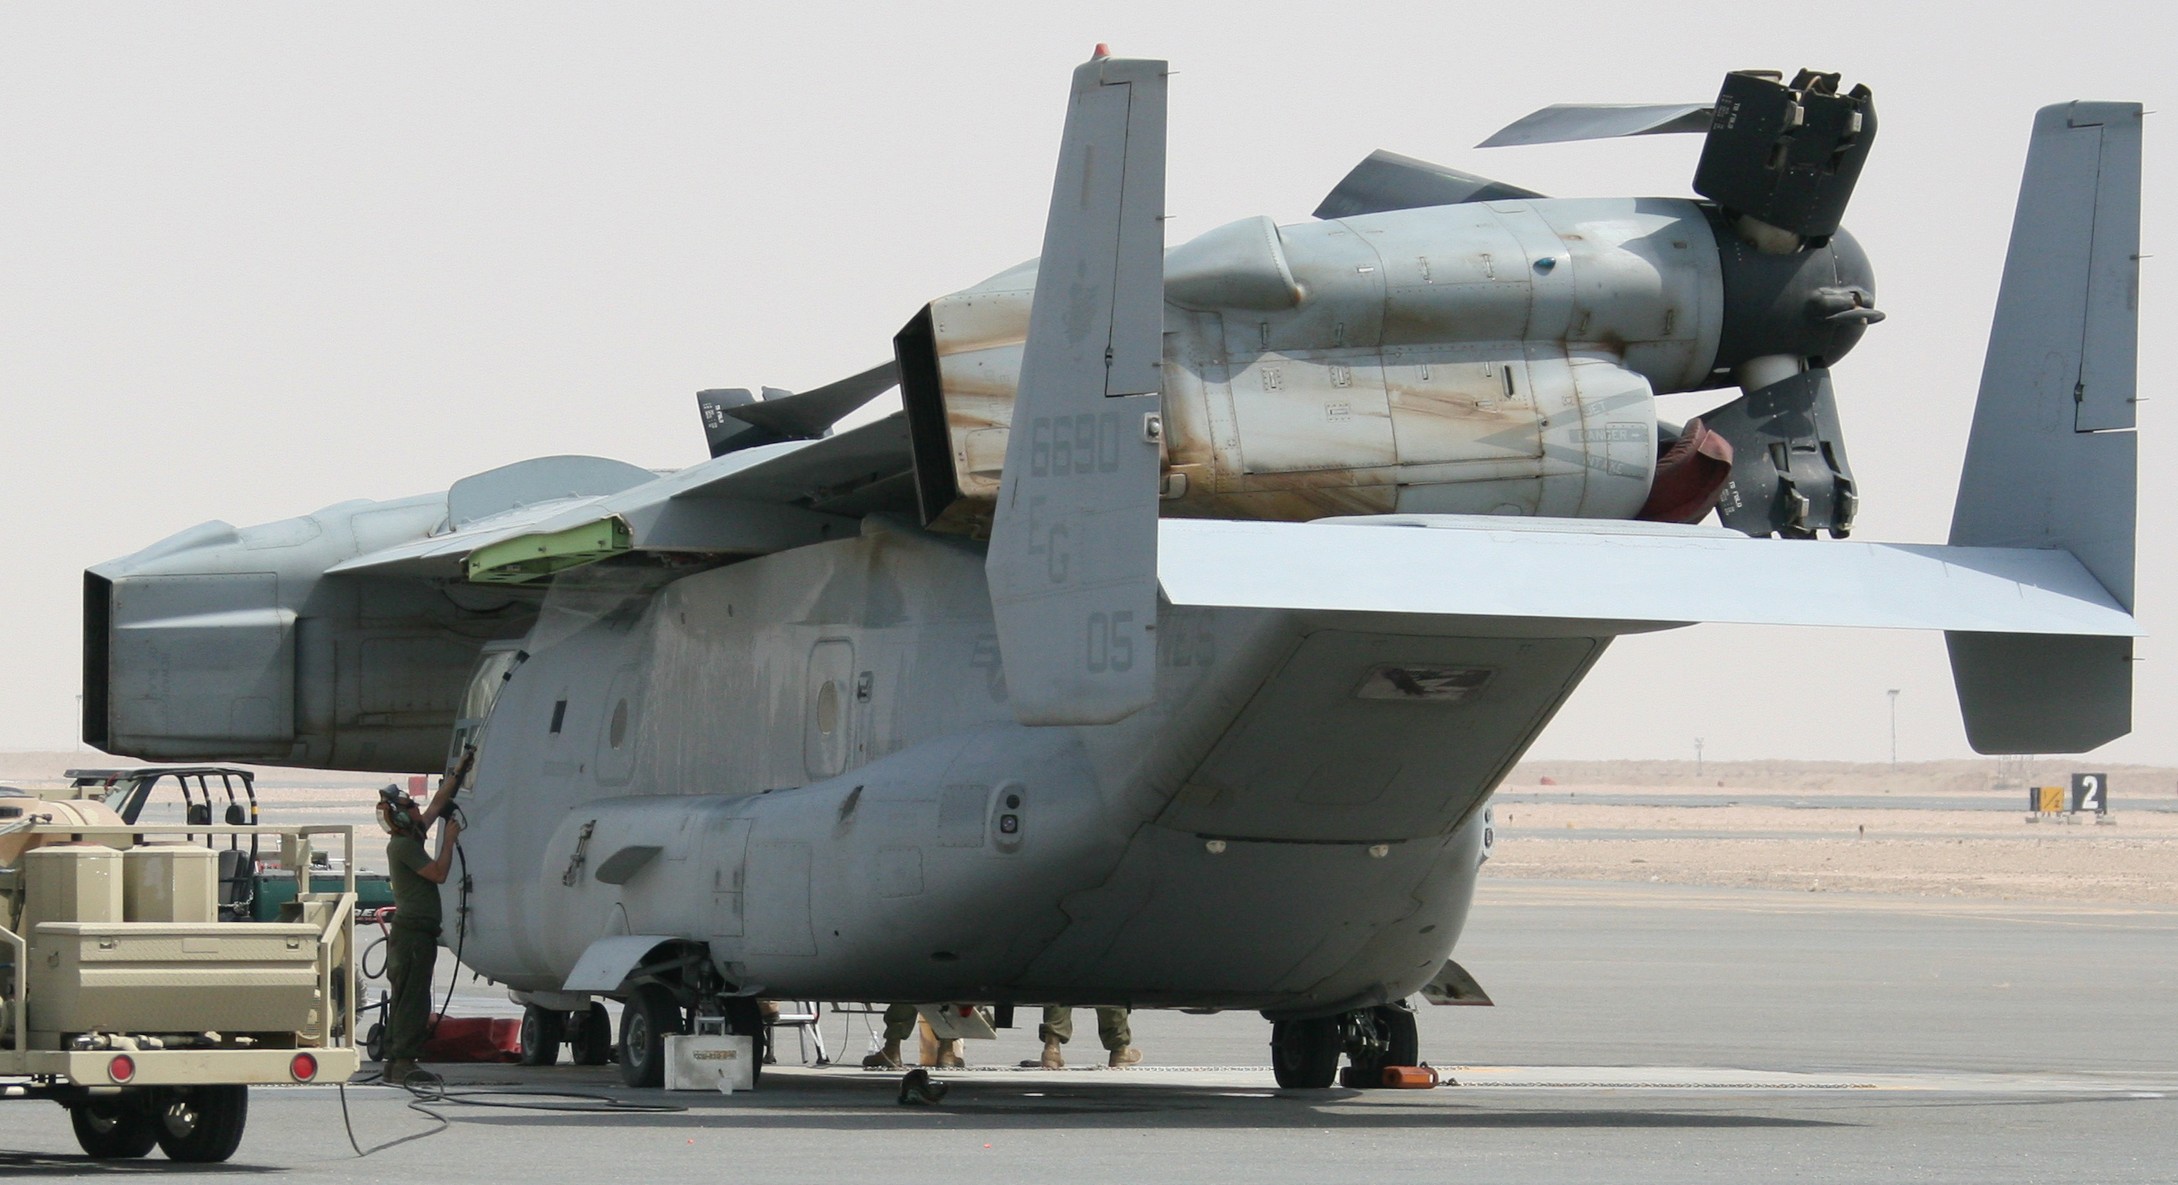 vmm-263 thunder chickens mv-22b osprey udairi army airfield kuwait 2009 106